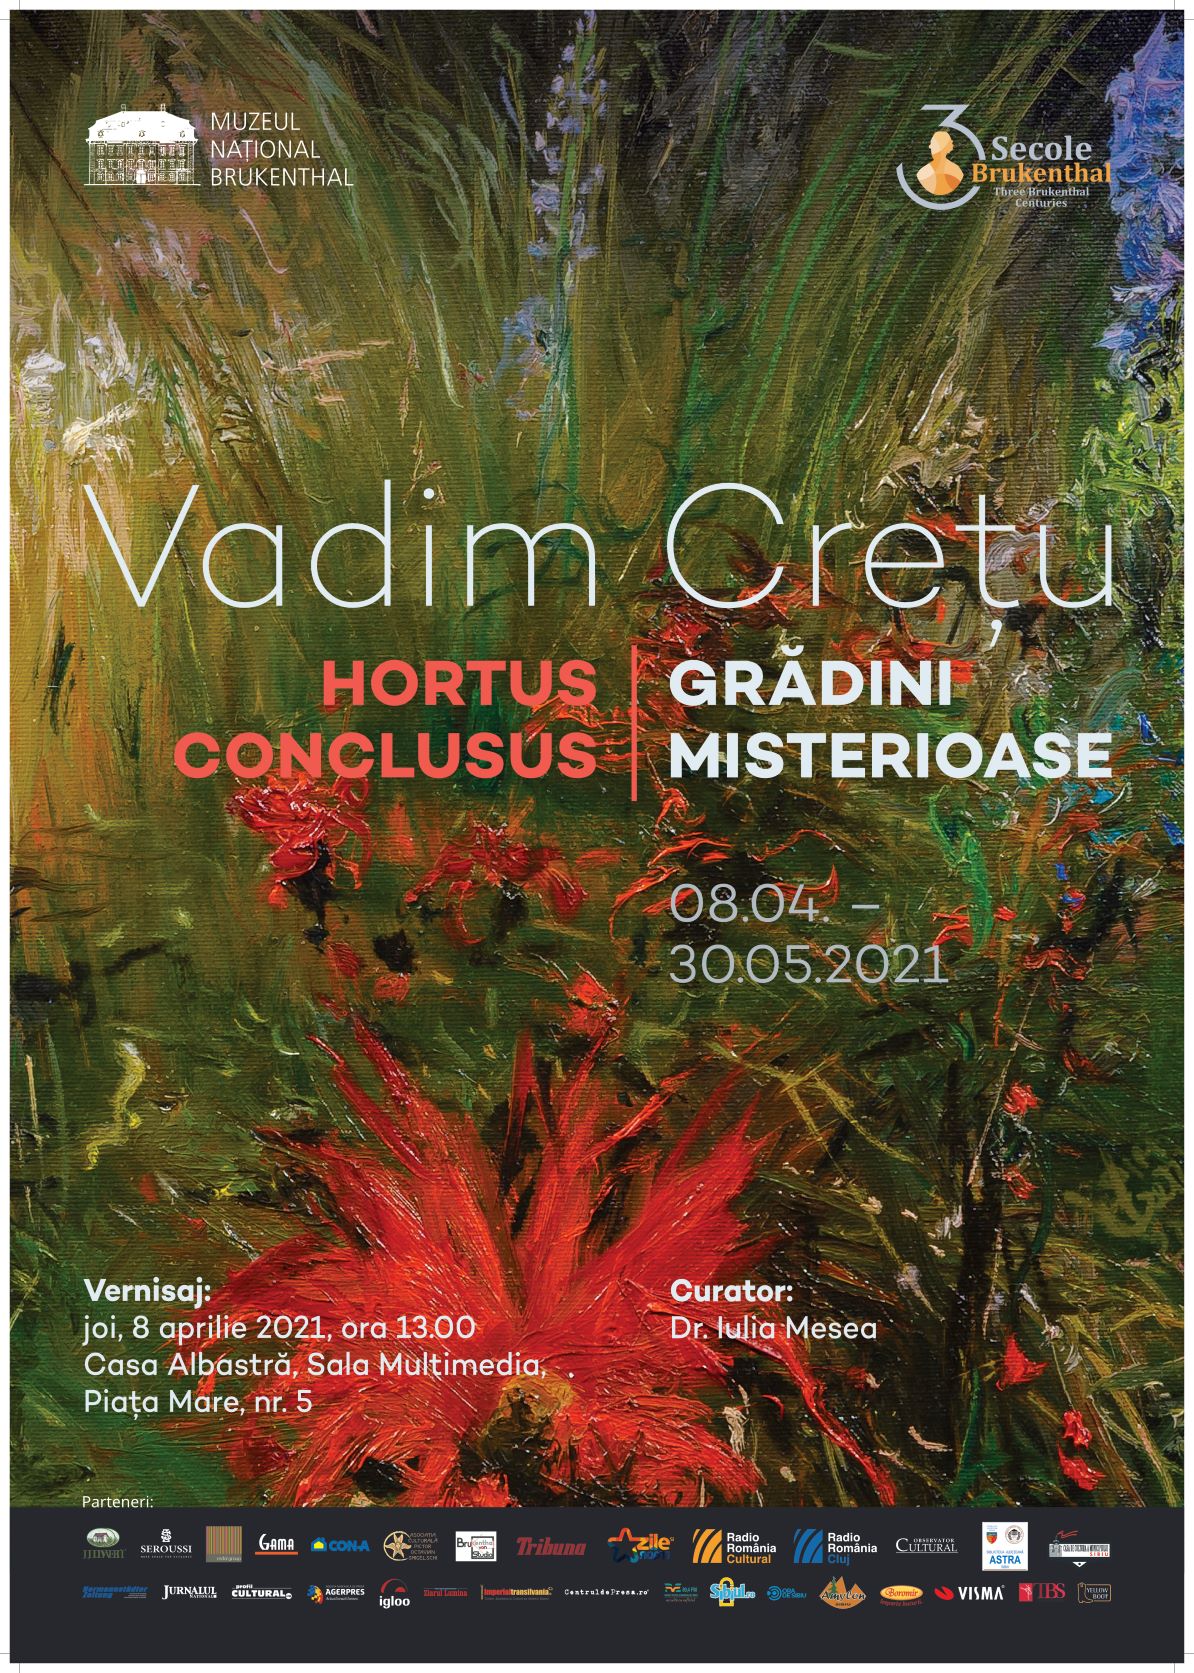 VADIM CREȚU. Hortus Conclusus / Mysterious Gardens